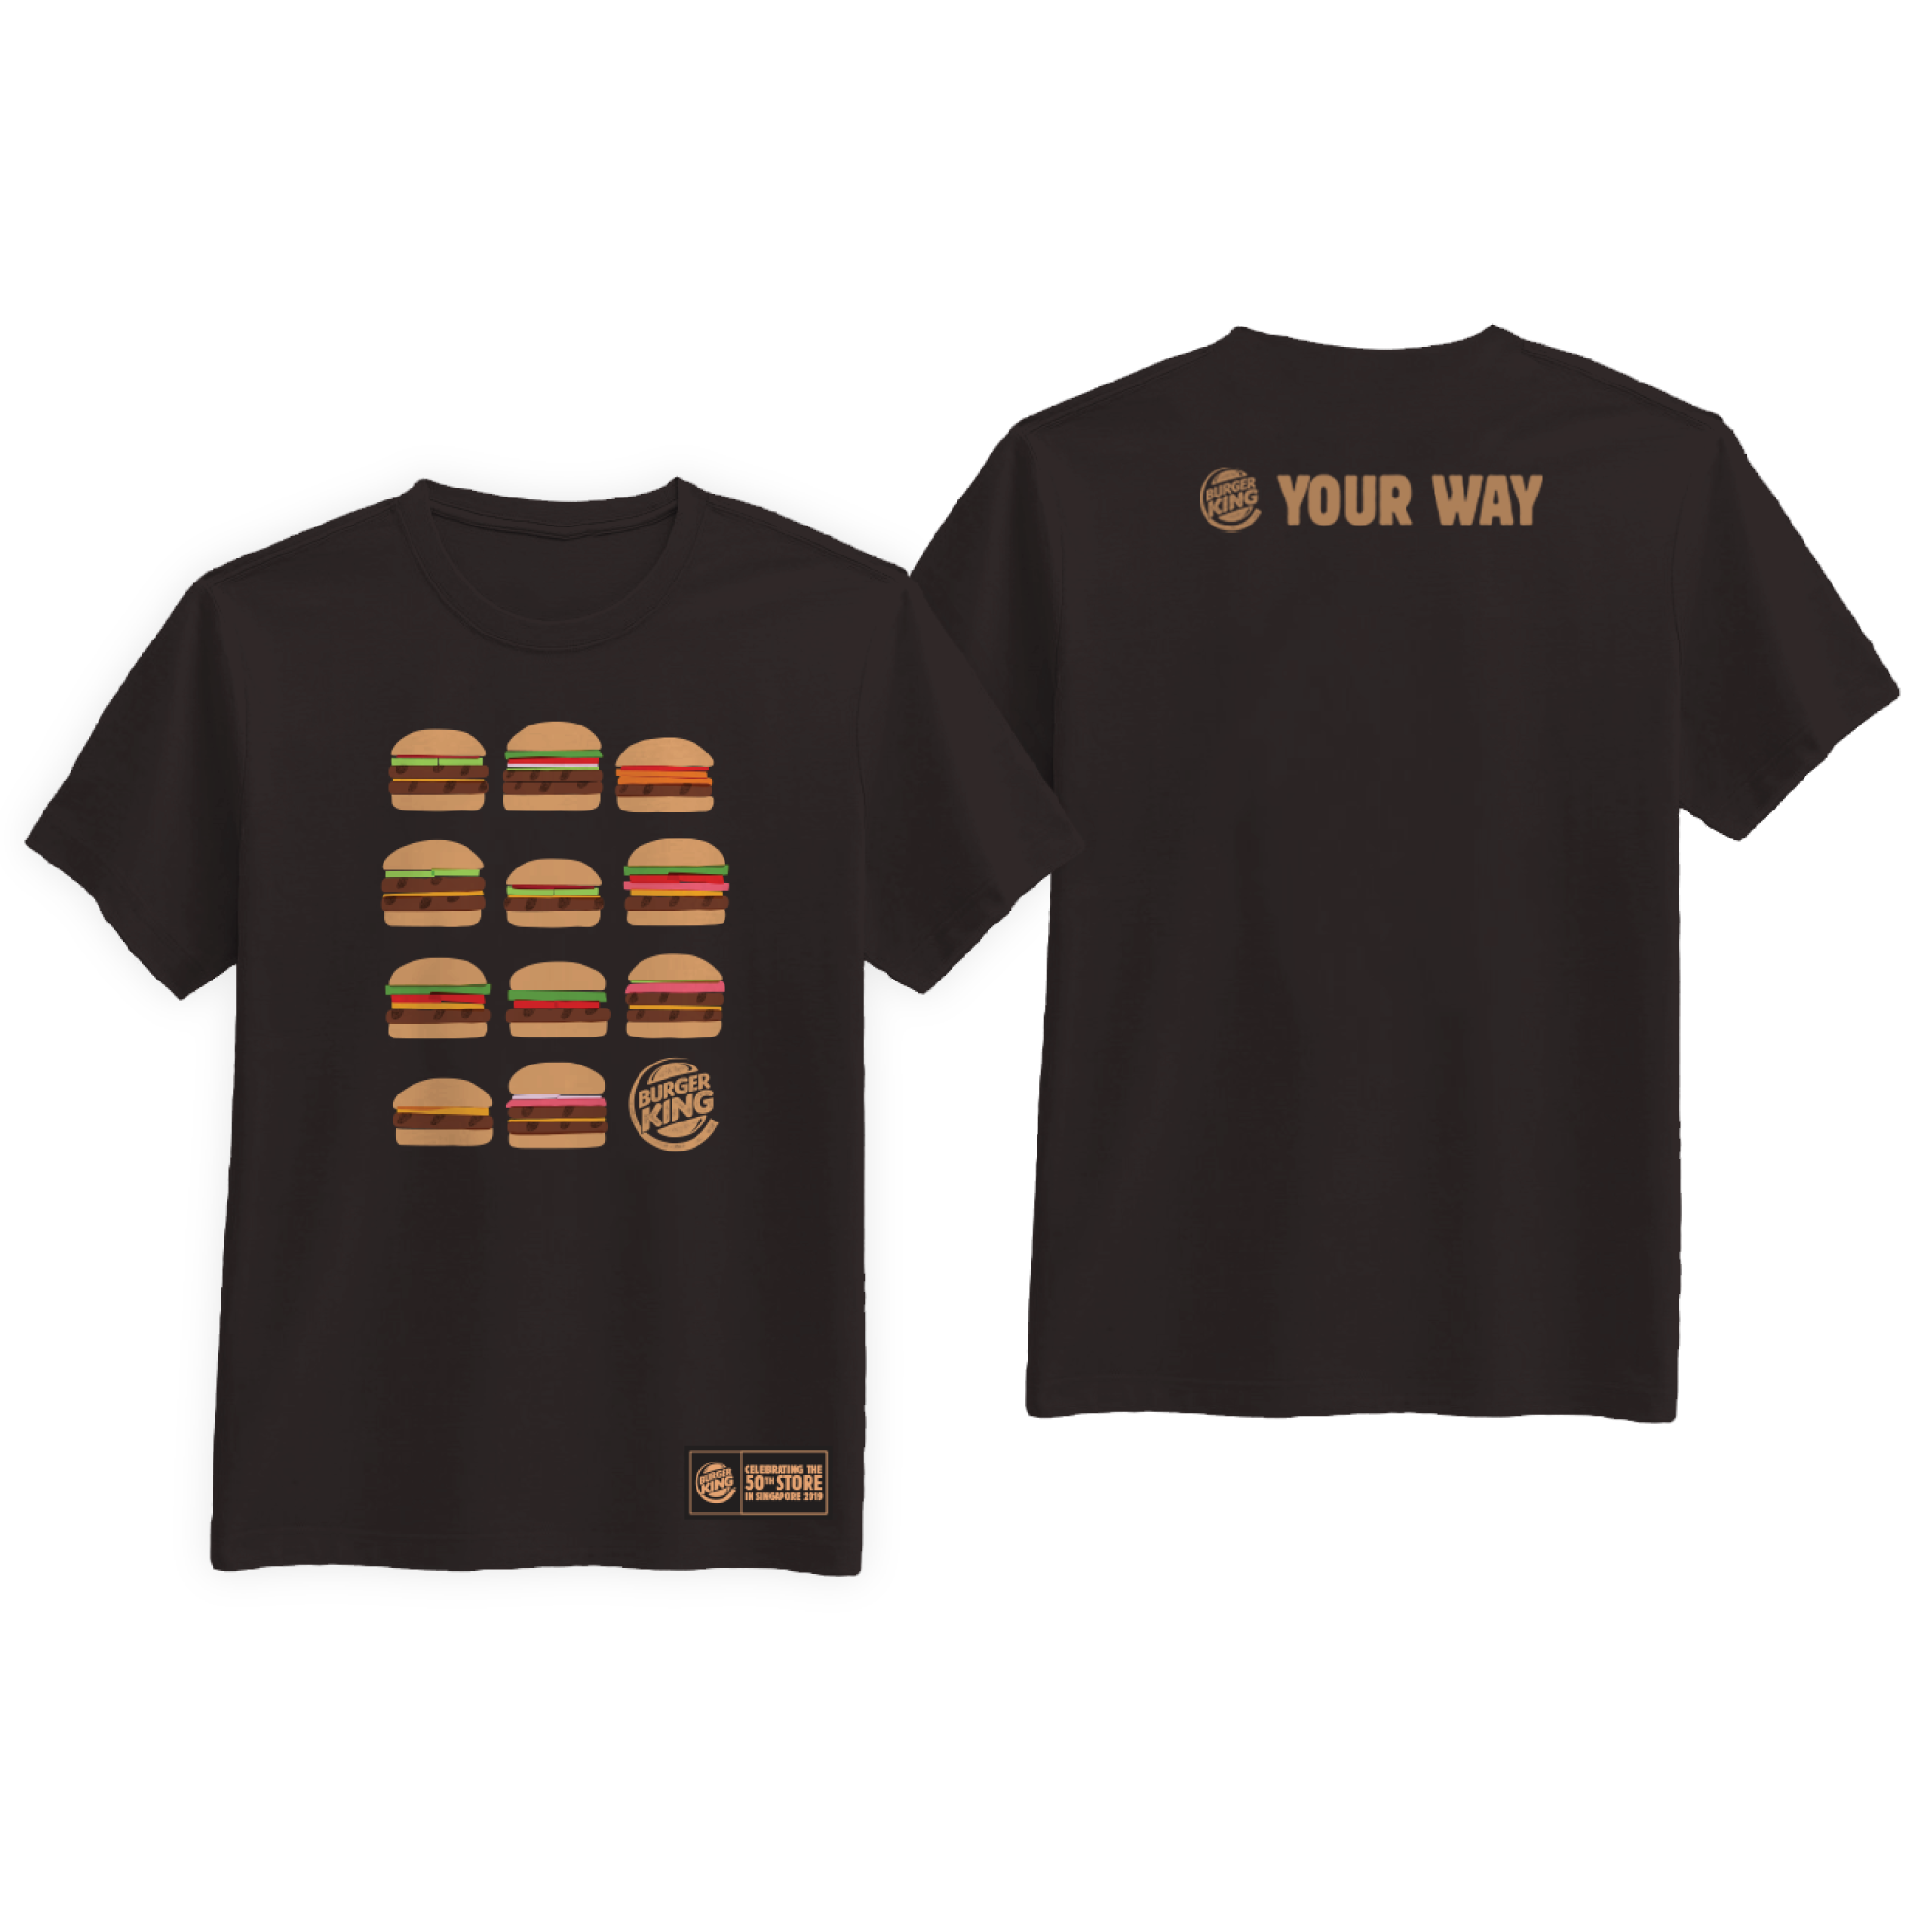 Burger King S'pore selling avocado burgers & burger design T-shirts ...